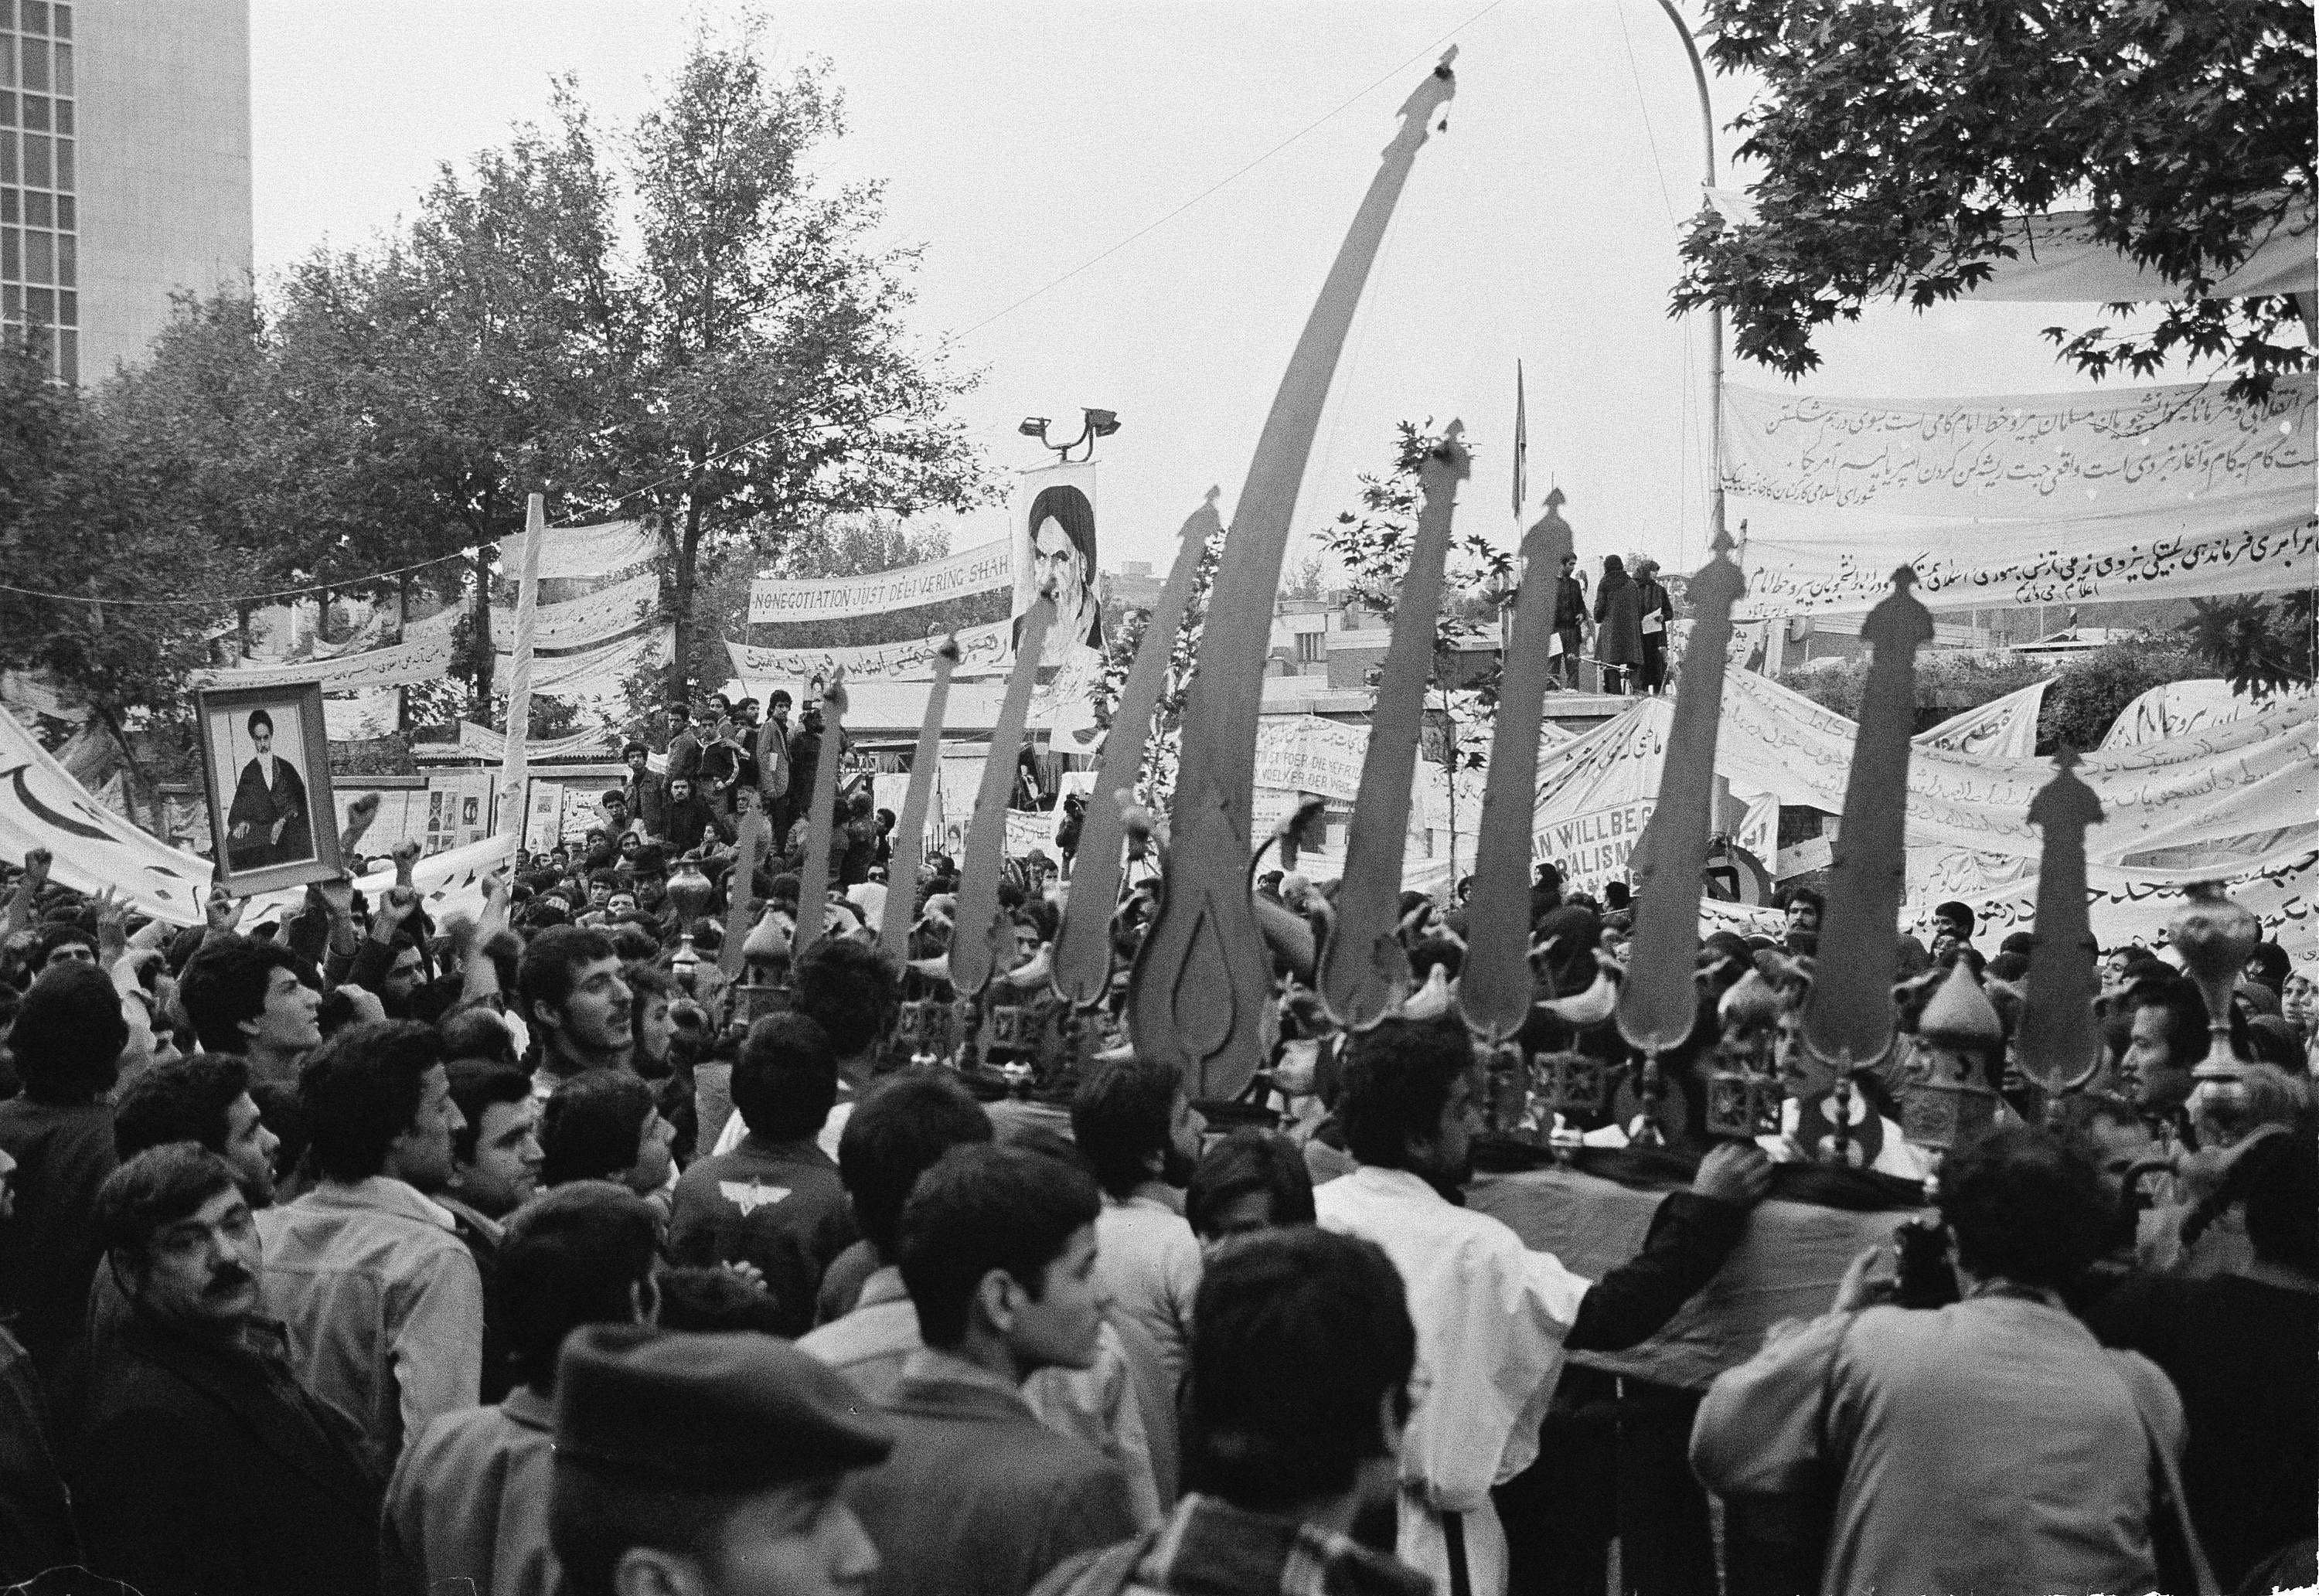 IRAN HOSTAGE CRISIS 1979